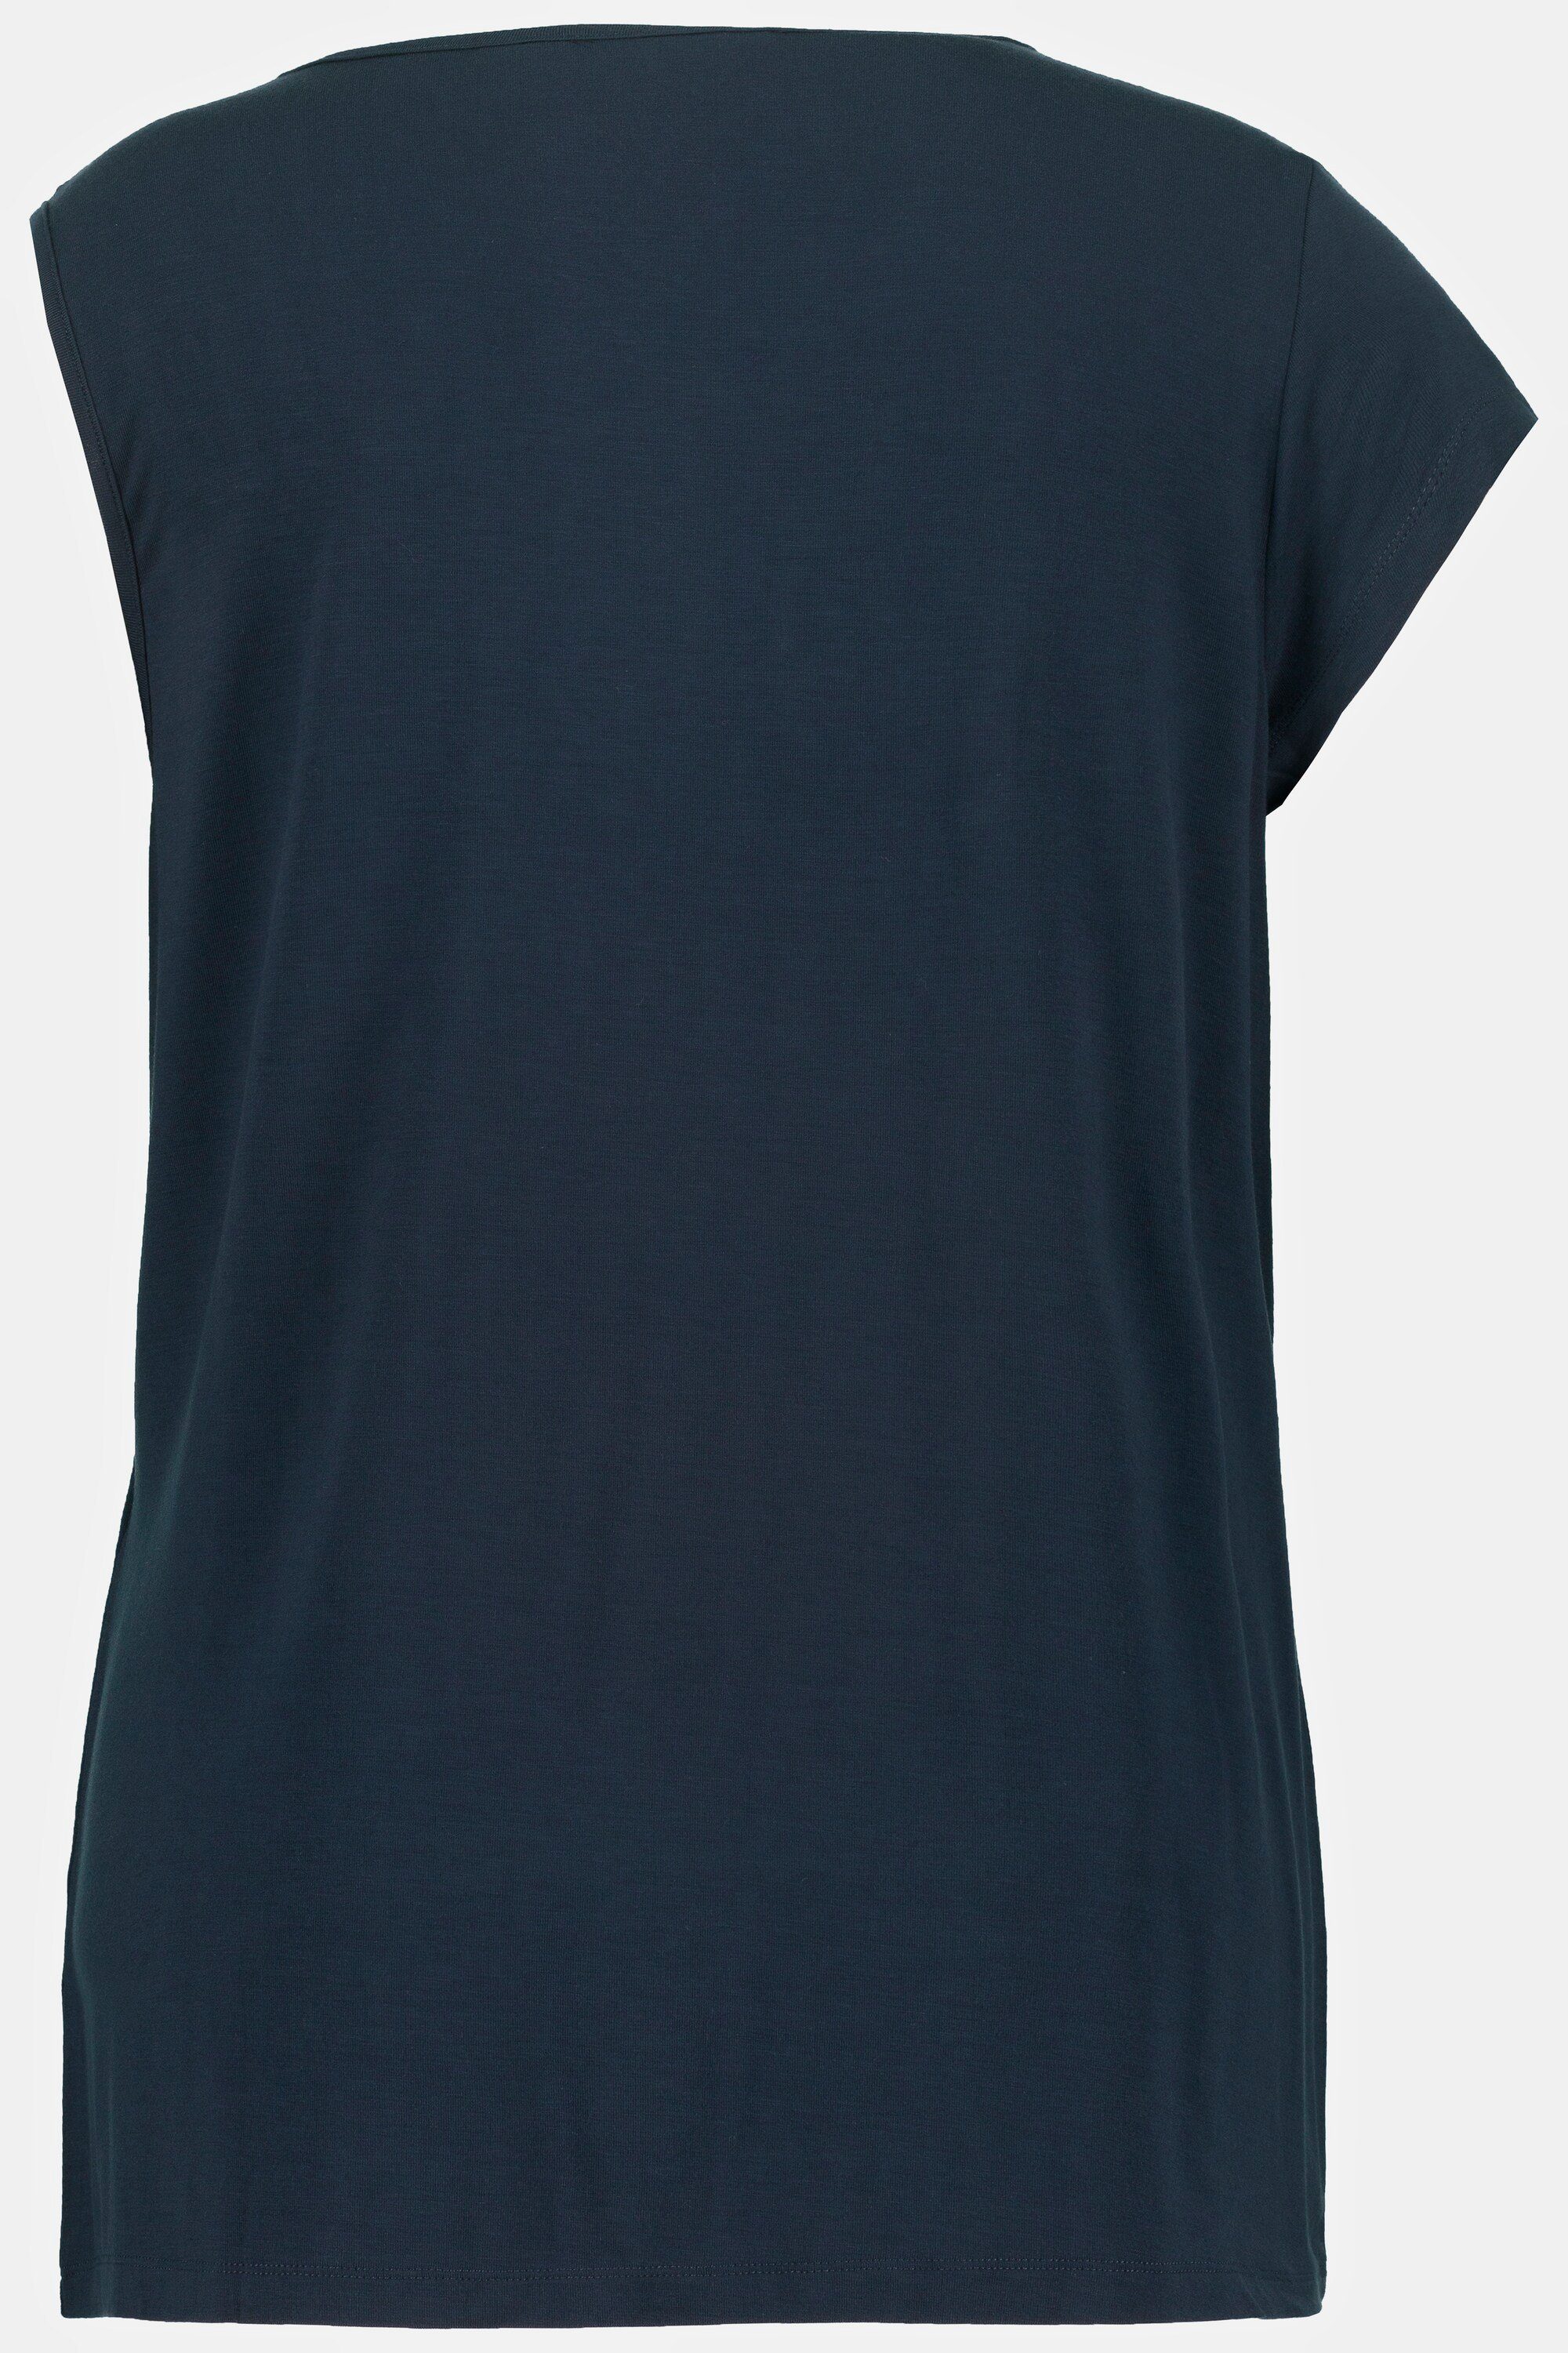 T-Shirt Ausschnitt Rundhalsshirt Classic Ulla marine Popken asymmetrischer